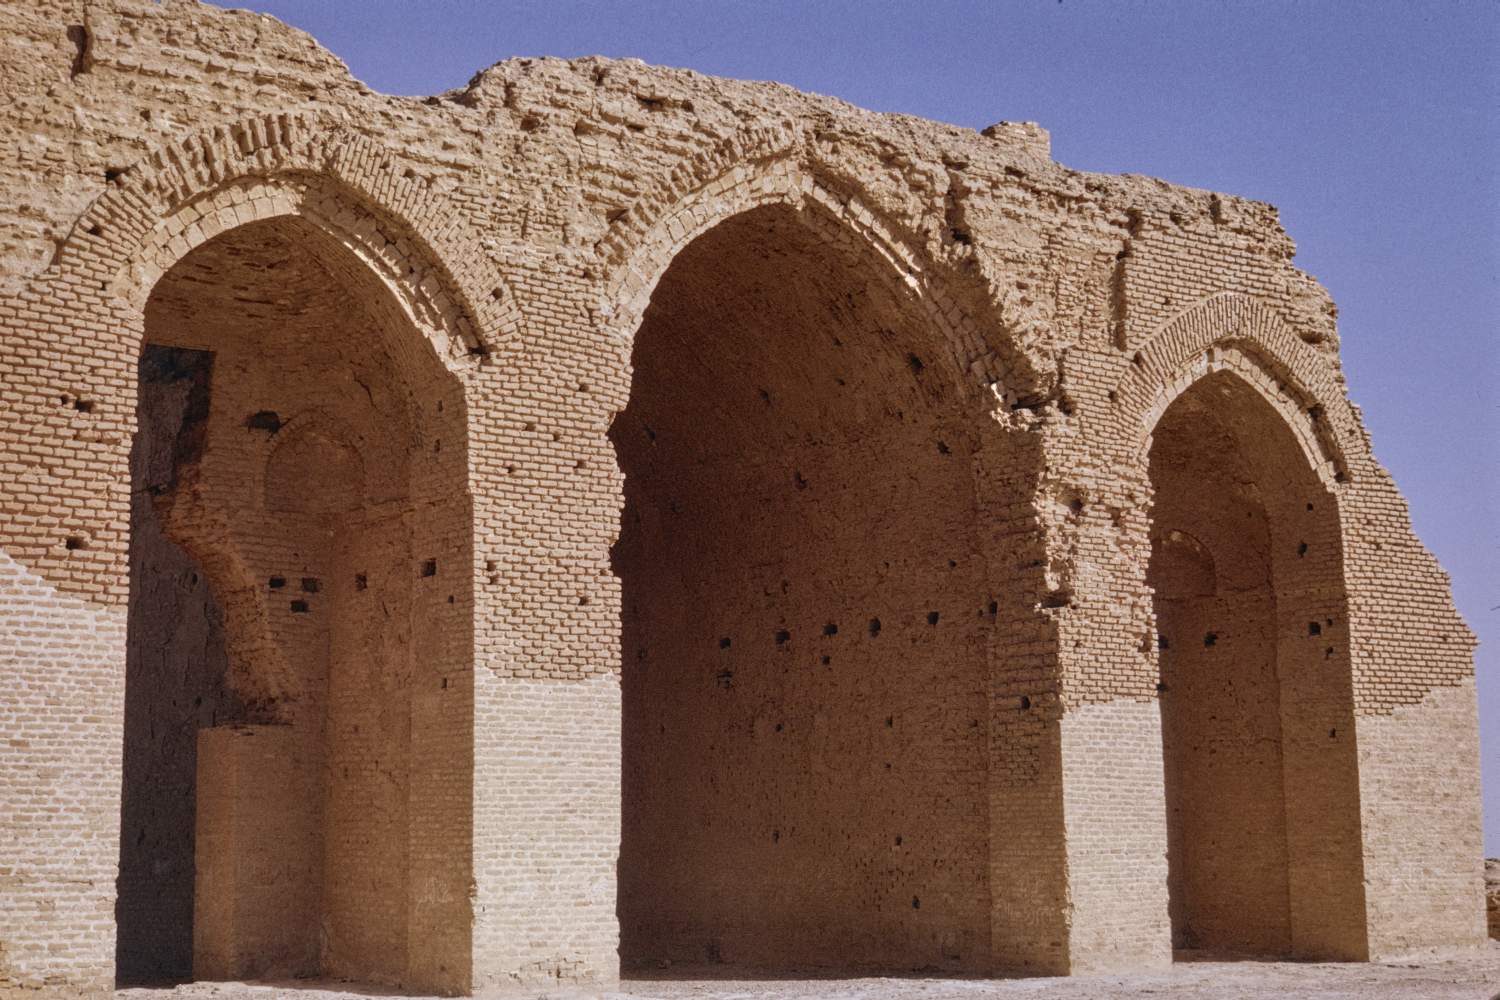 View of triple arched western gate (so-called Bab al-Amma).